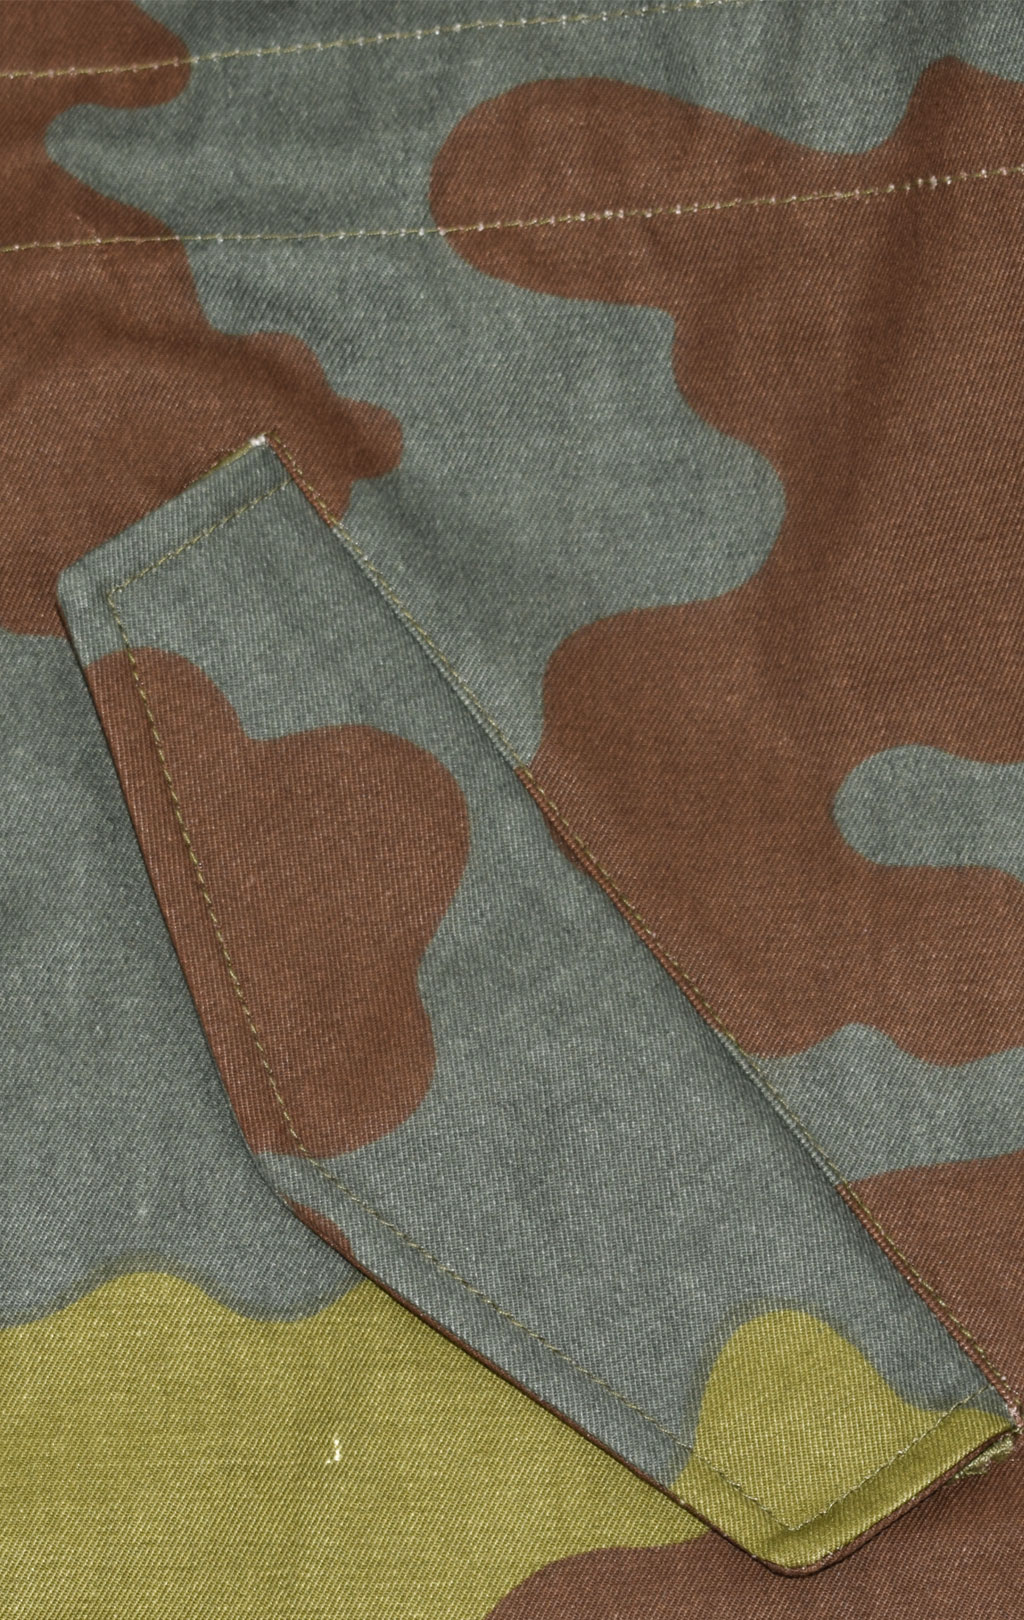 Куртка Batalion San Marco старого образца с подстёжкой camo Италия